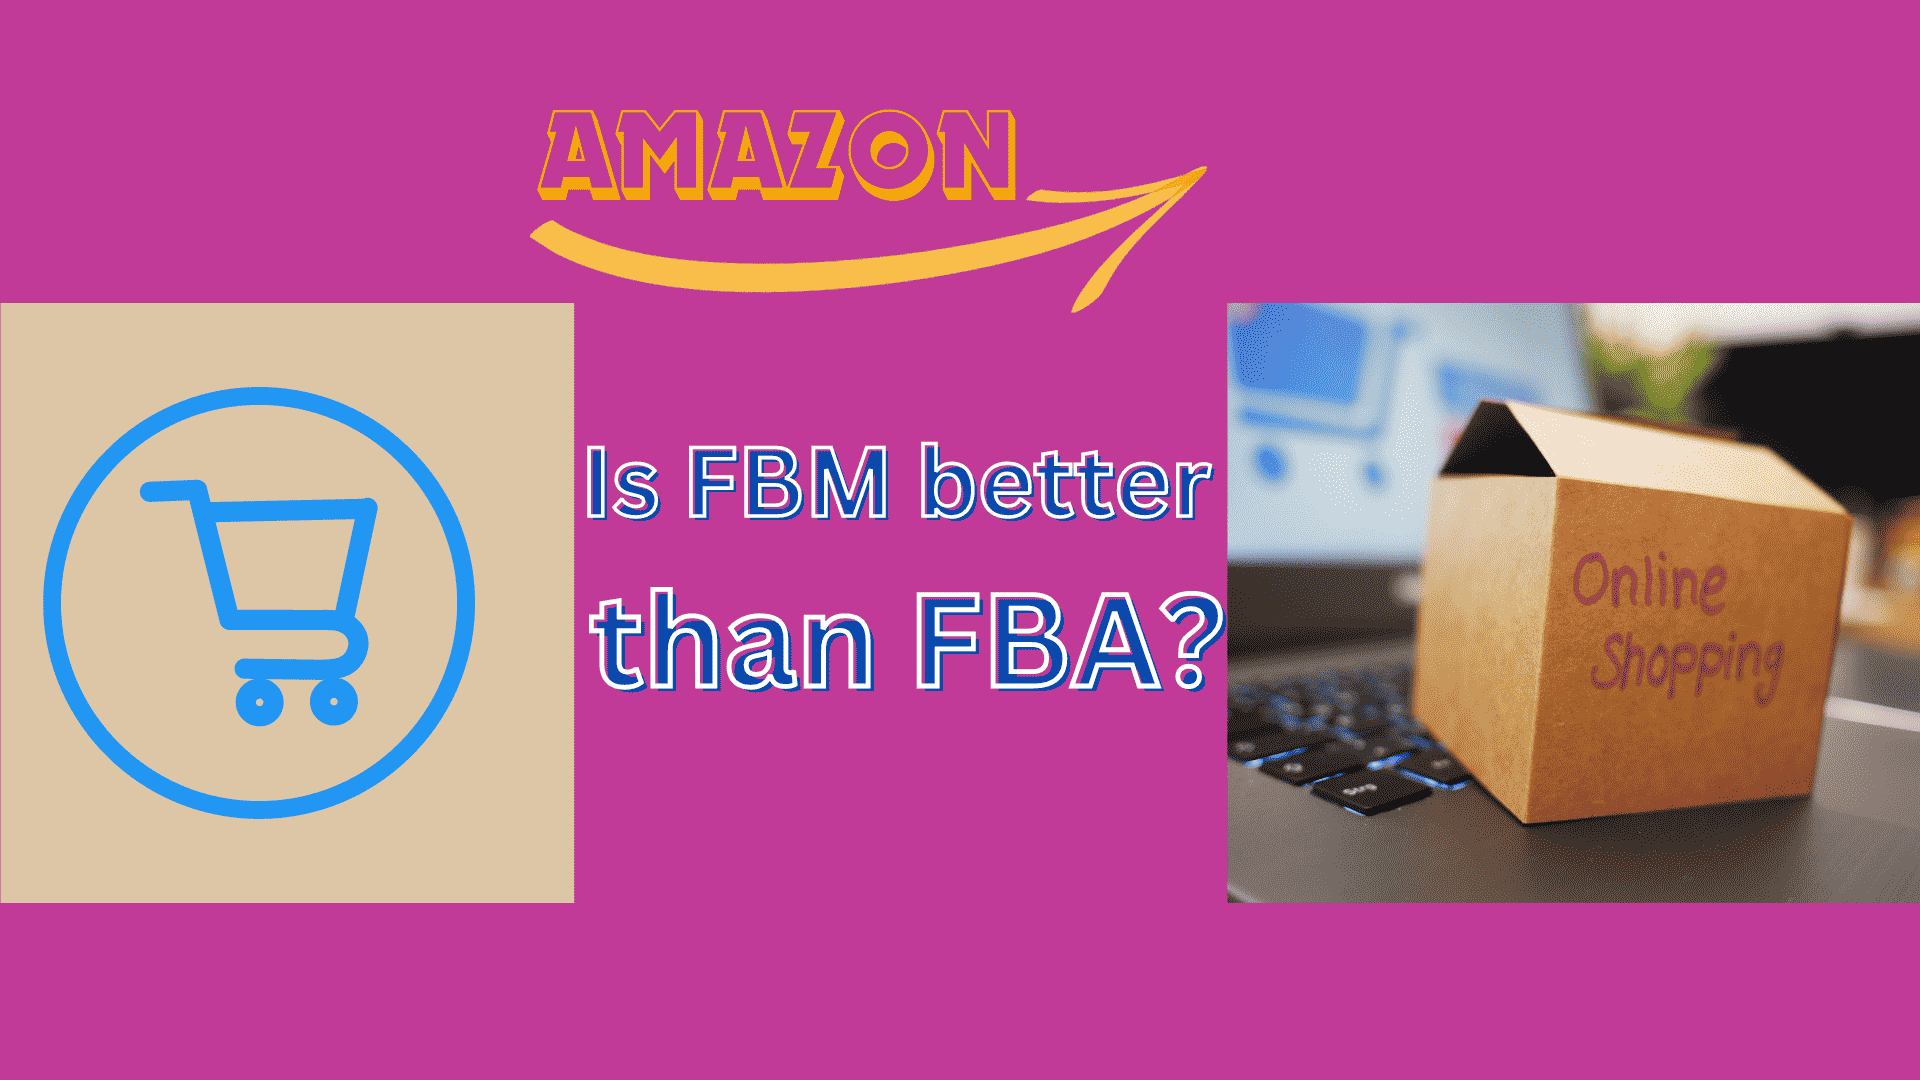 Is FBM better than FBA?